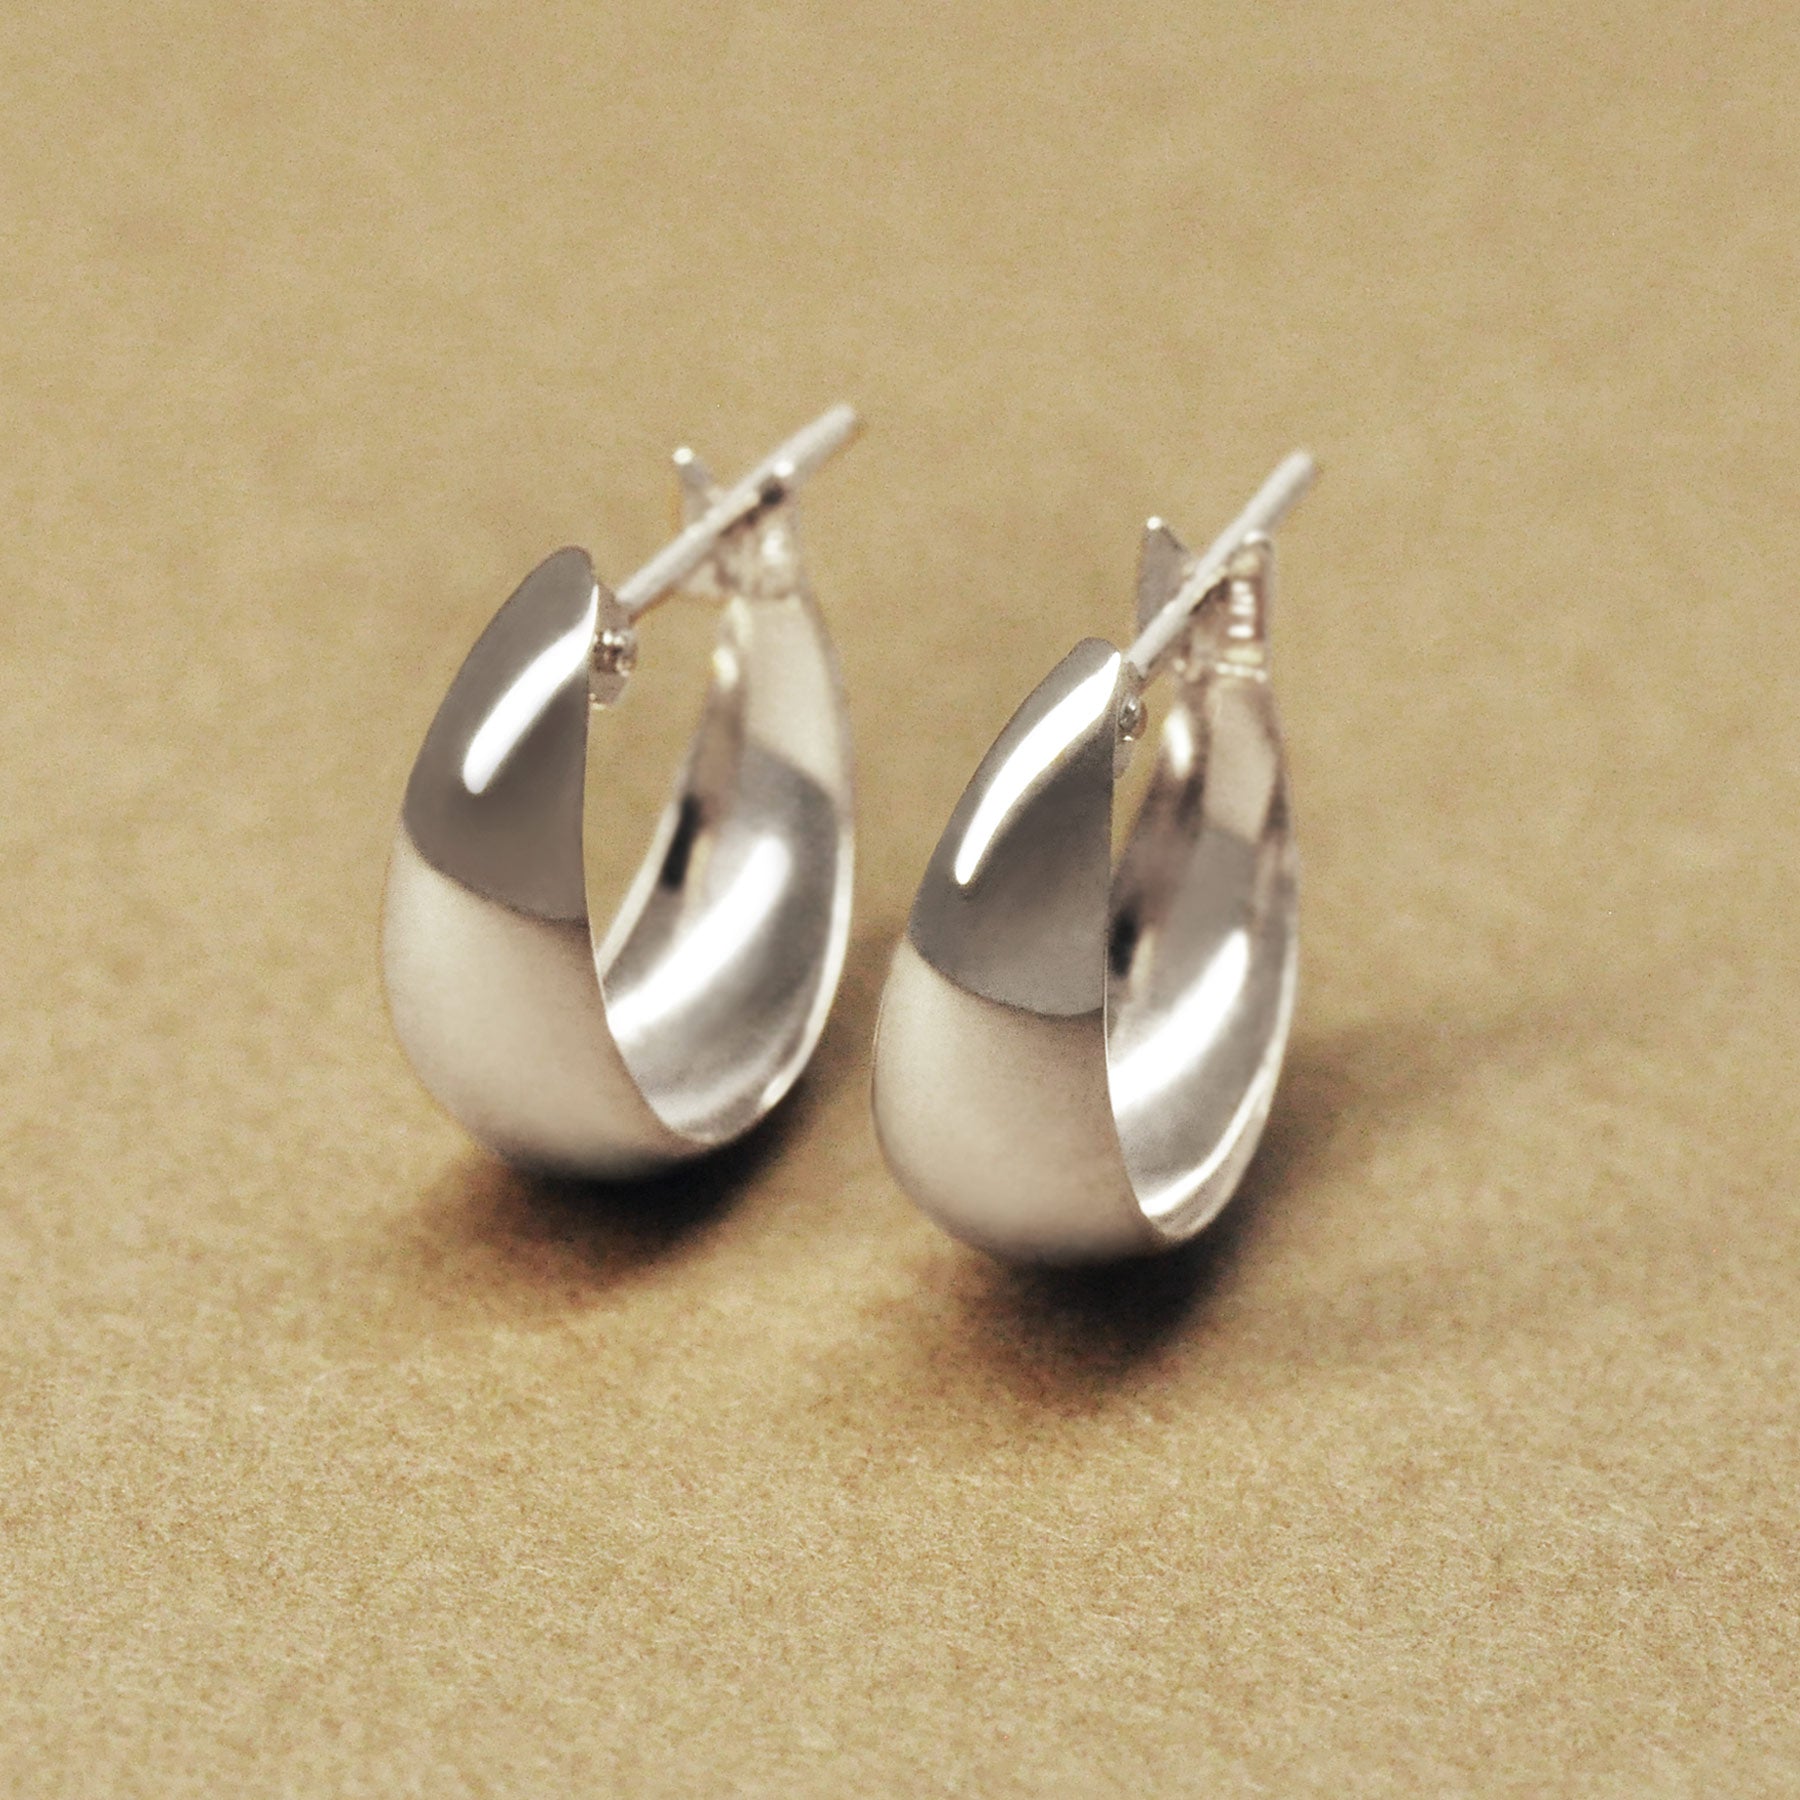 10K White Gold Moon Design Hoop Earrings - Product Image